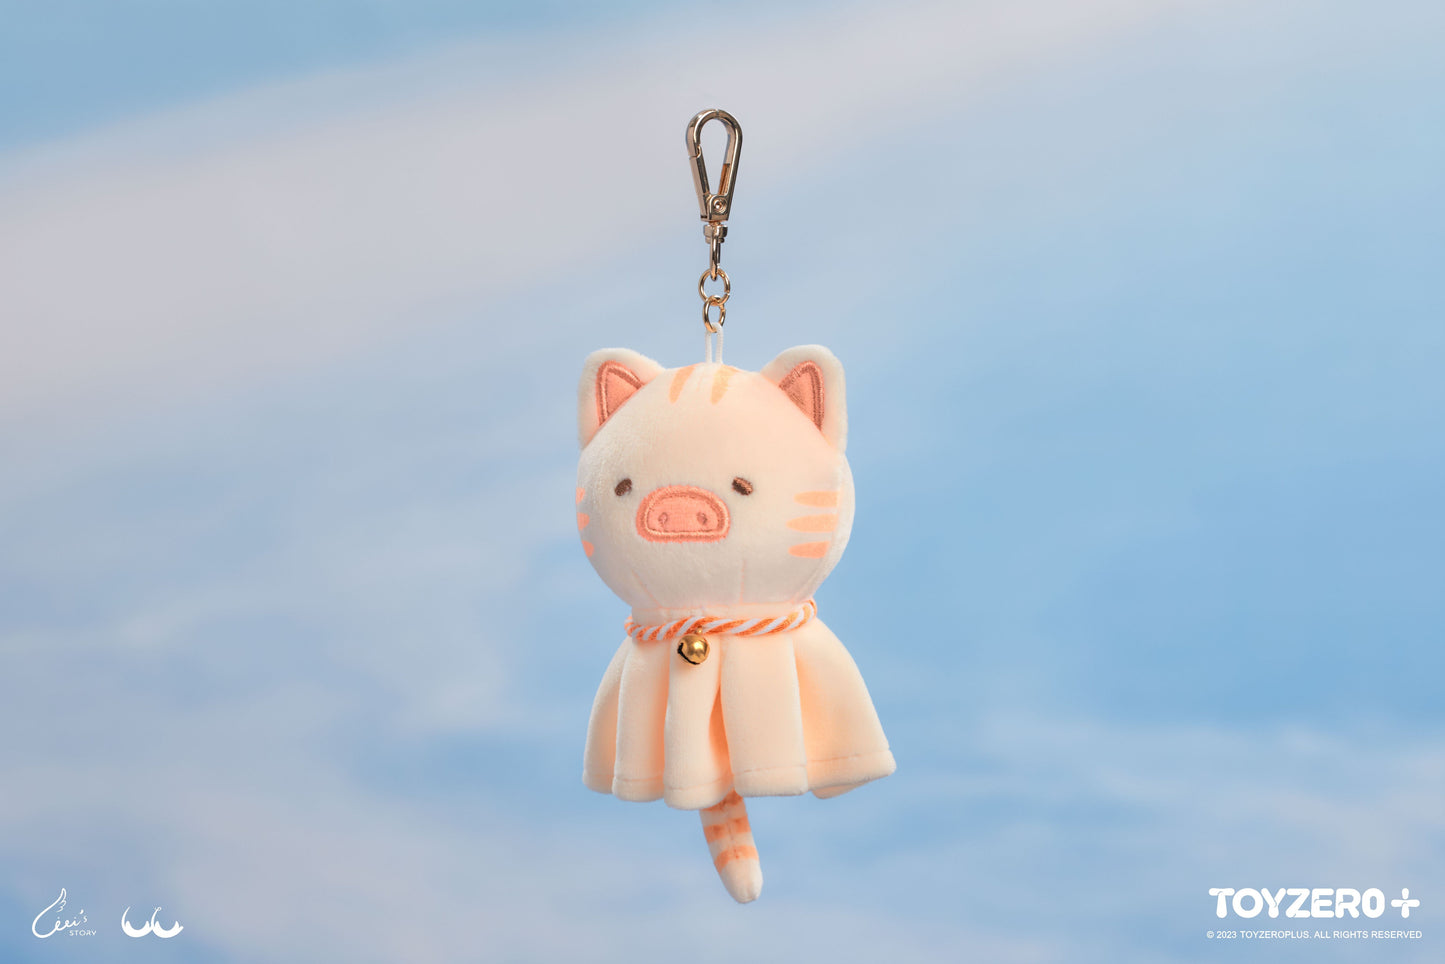 LuLu the Piggy Find Your Way - Kitty Teru Teru Bozu 10cm Plush Keychain 罐頭豬LuLu 旅行系列 - 豬咪晴天娃娃10cm 毛絨匙扣